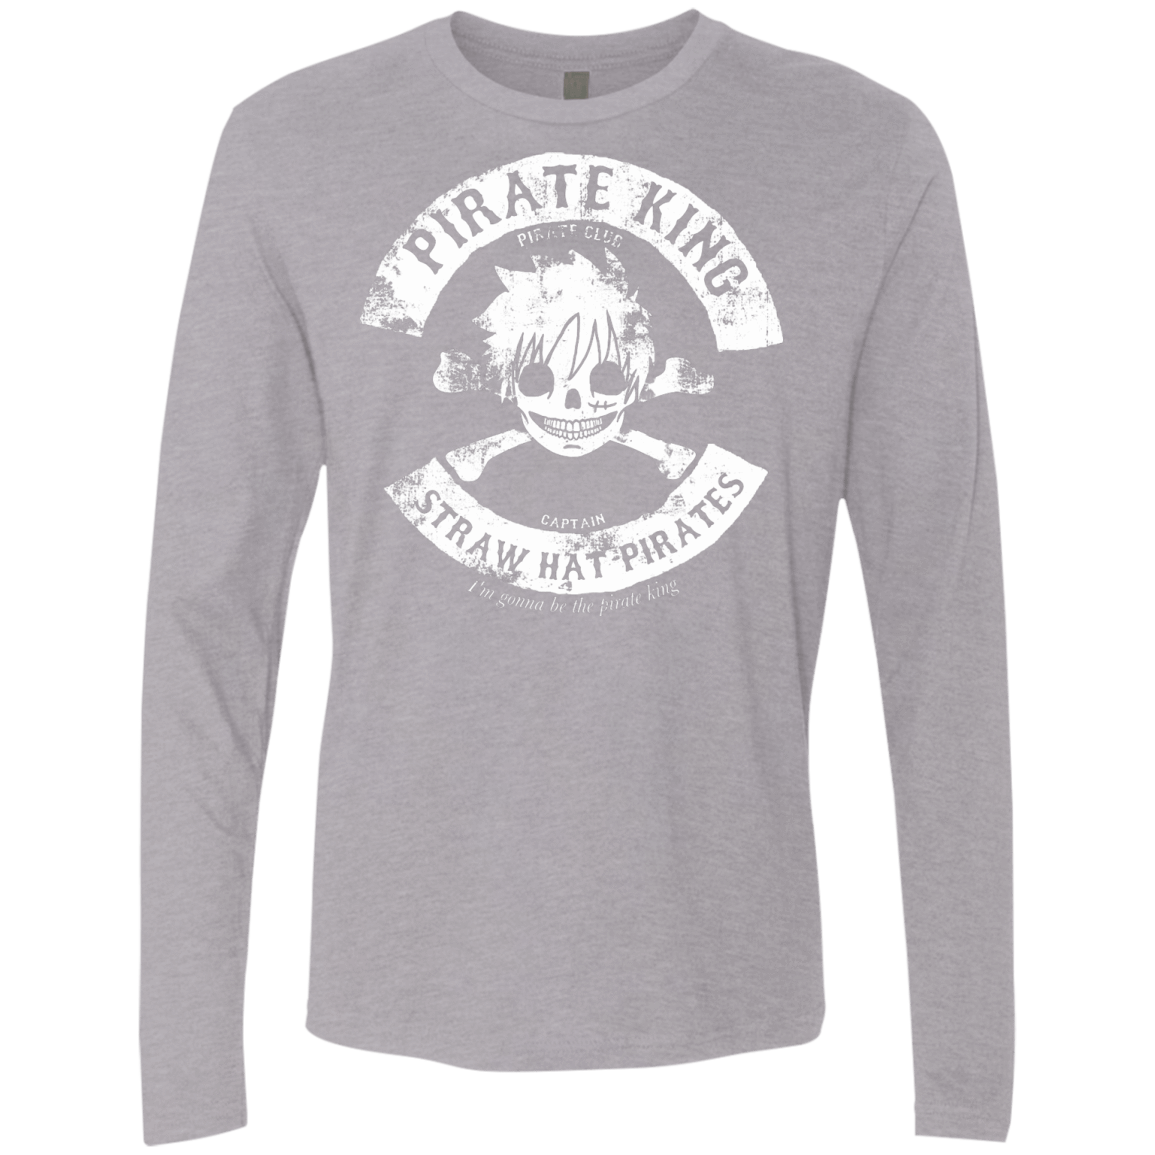 T-Shirts Heather Grey / S Pirate King Skull Men's Premium Long Sleeve